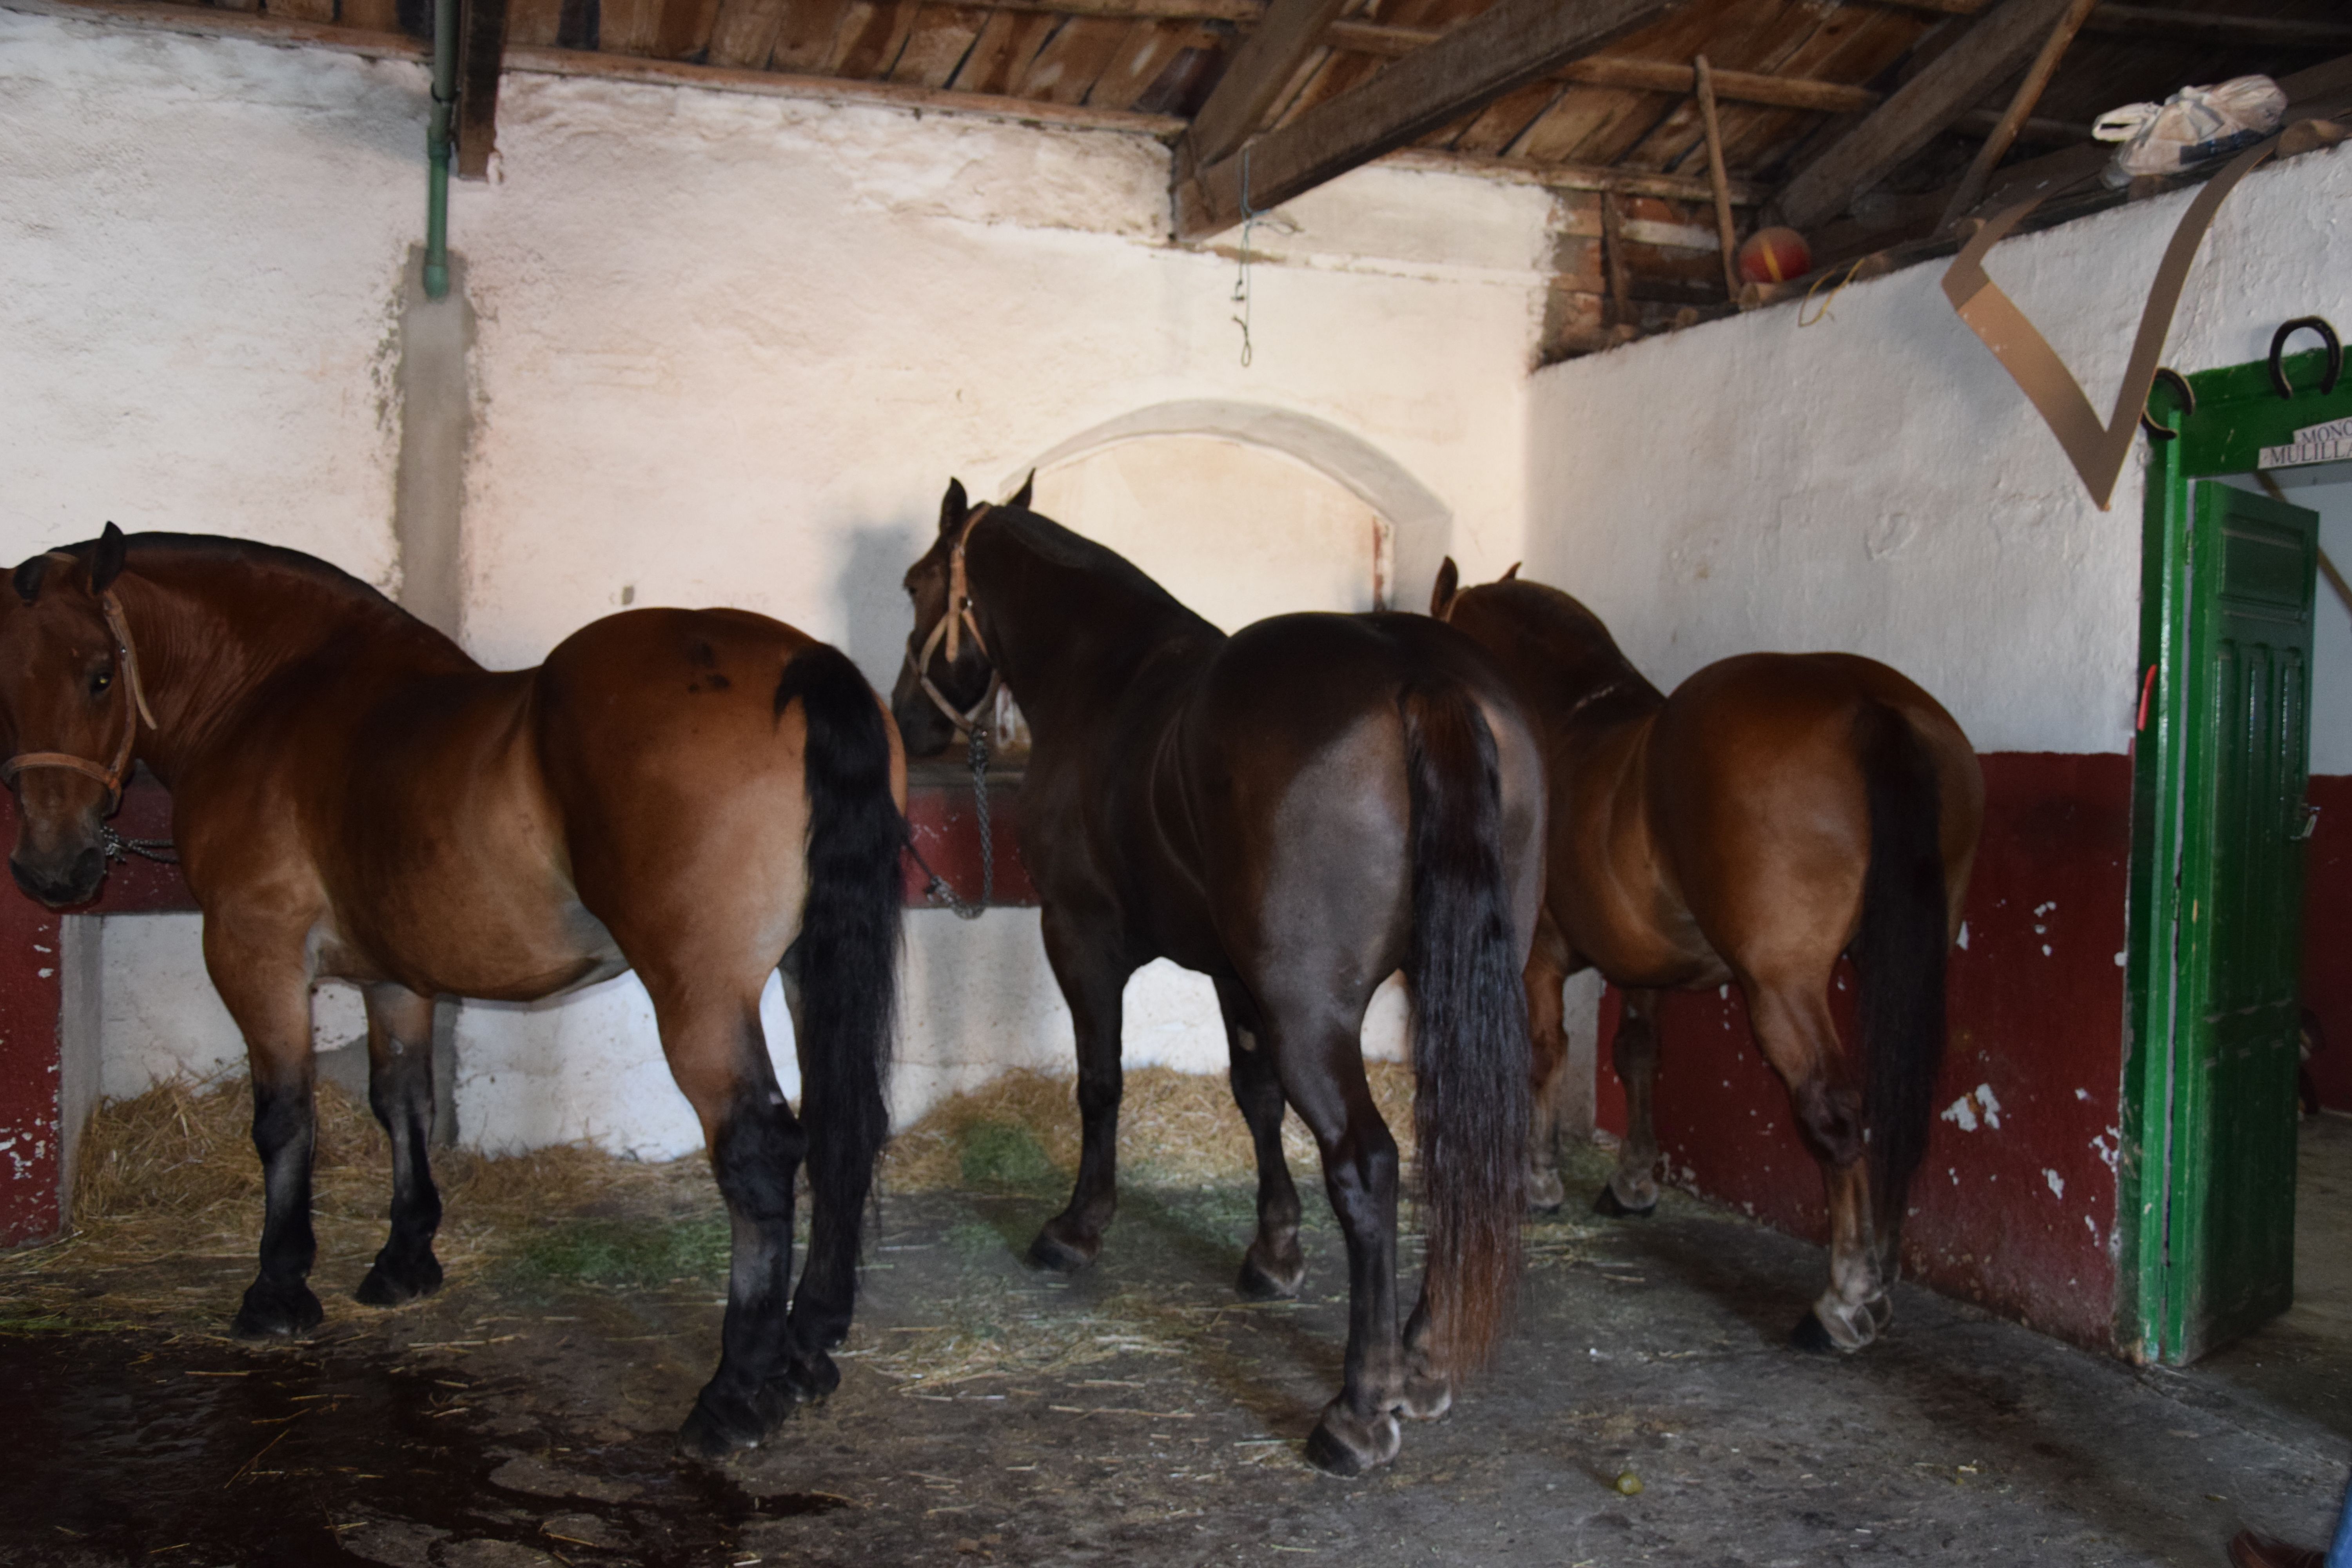 Cuadra caballos de picar Jerez de la Frontera. Fotos S24H (2)